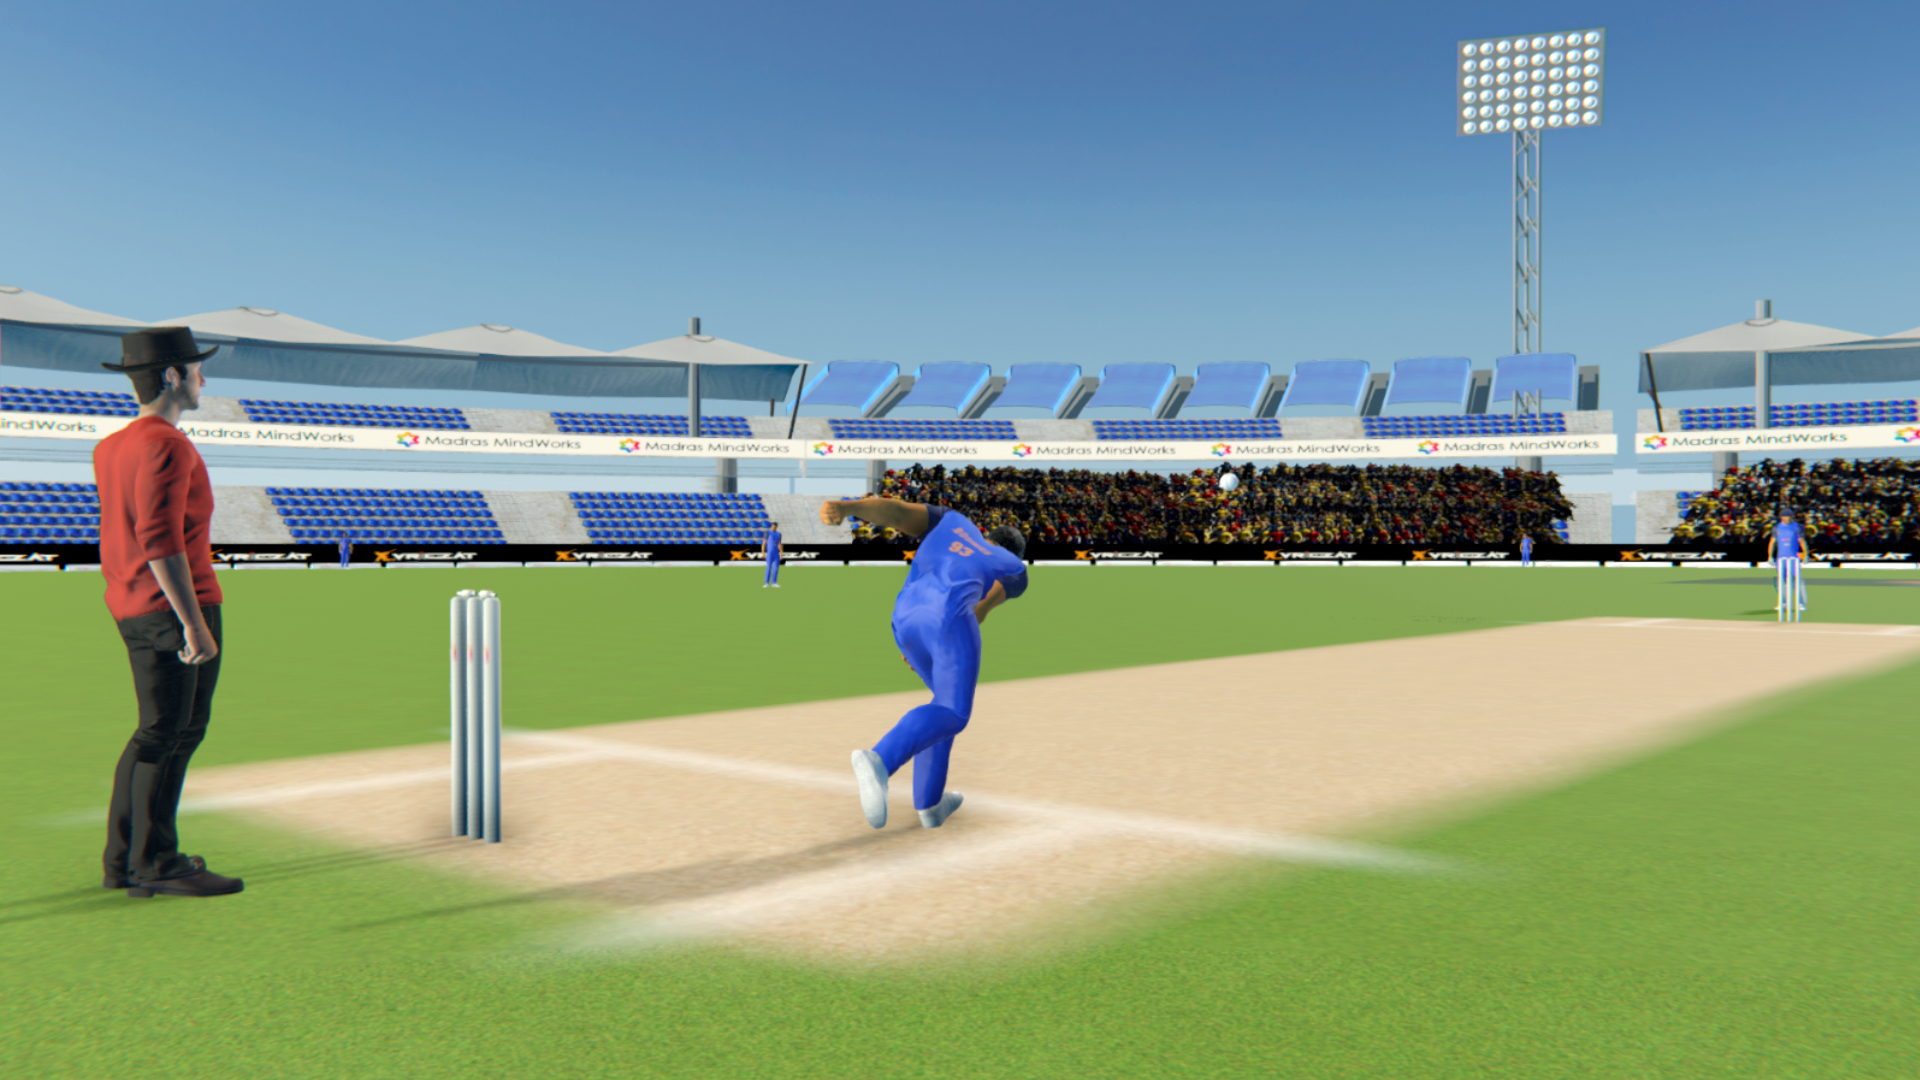 vr cricket game buy online